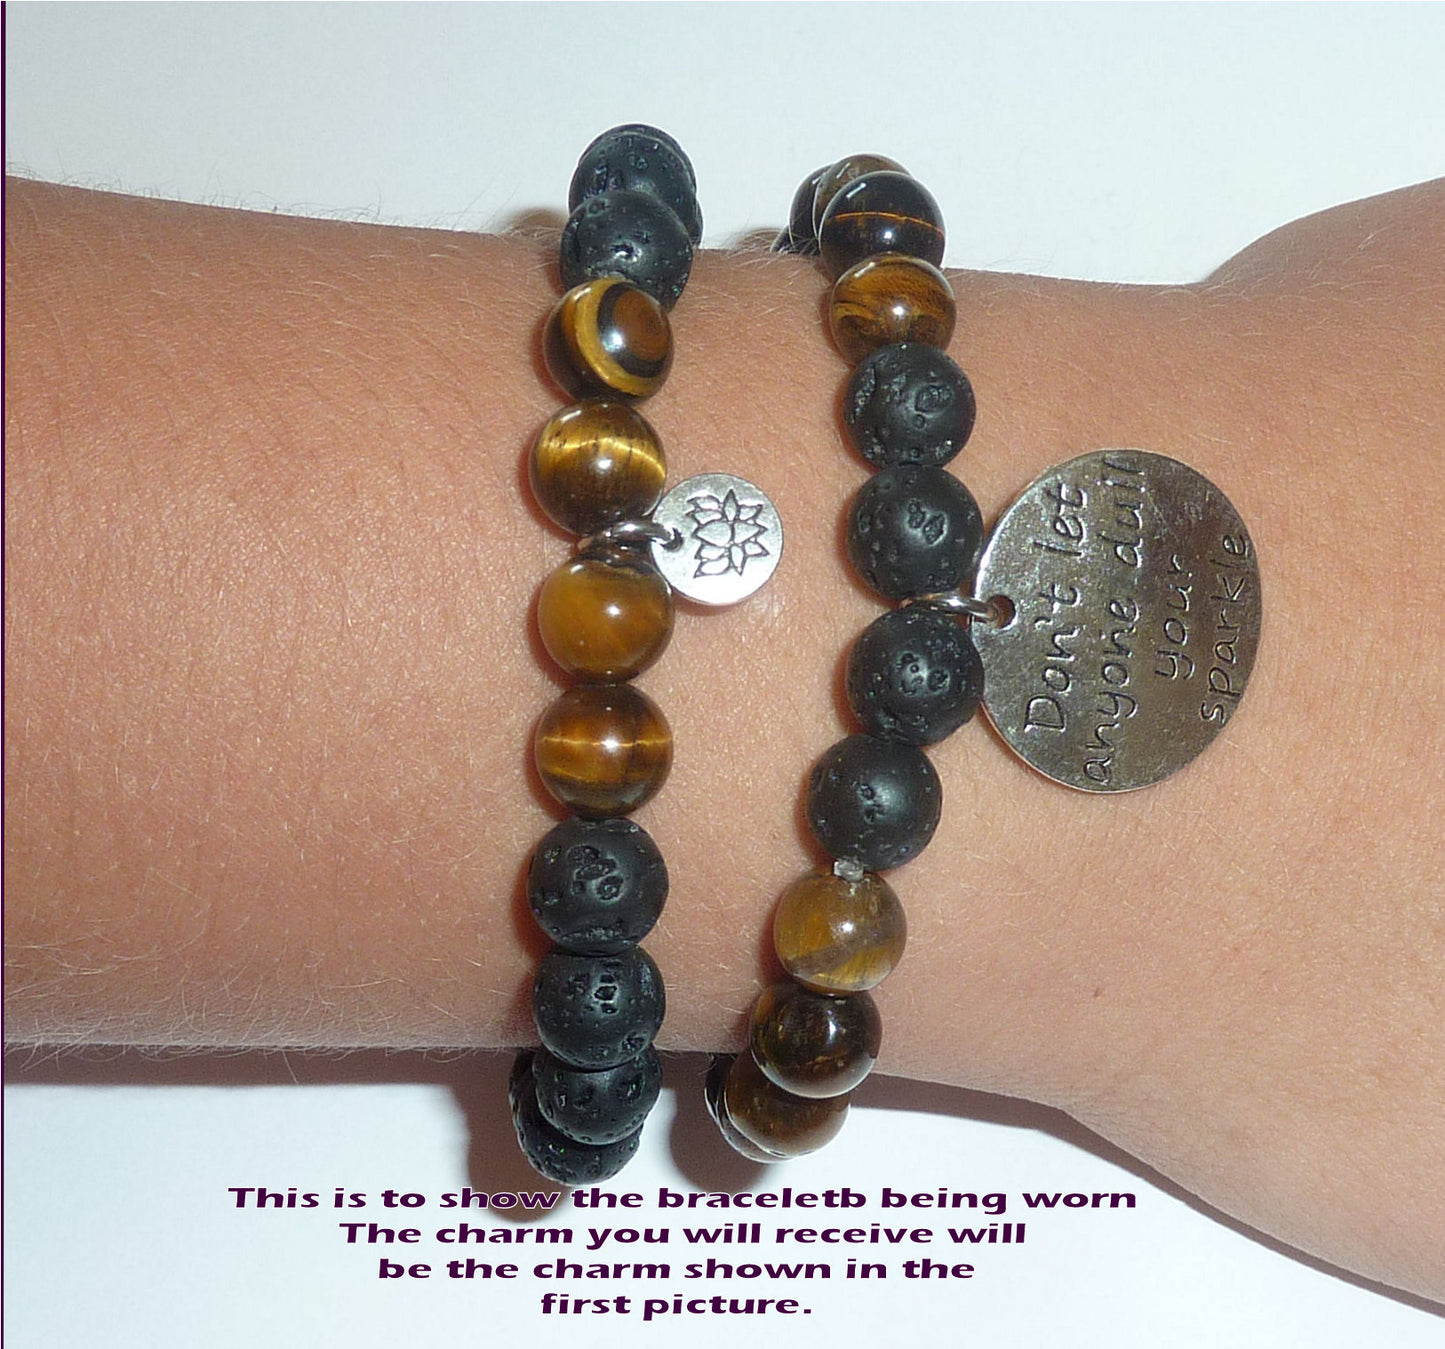 I Love Football - Women's Tiger Eye & Black Lava Diffuser Yoga Beads Charm Stretch Bracelet Gift Set